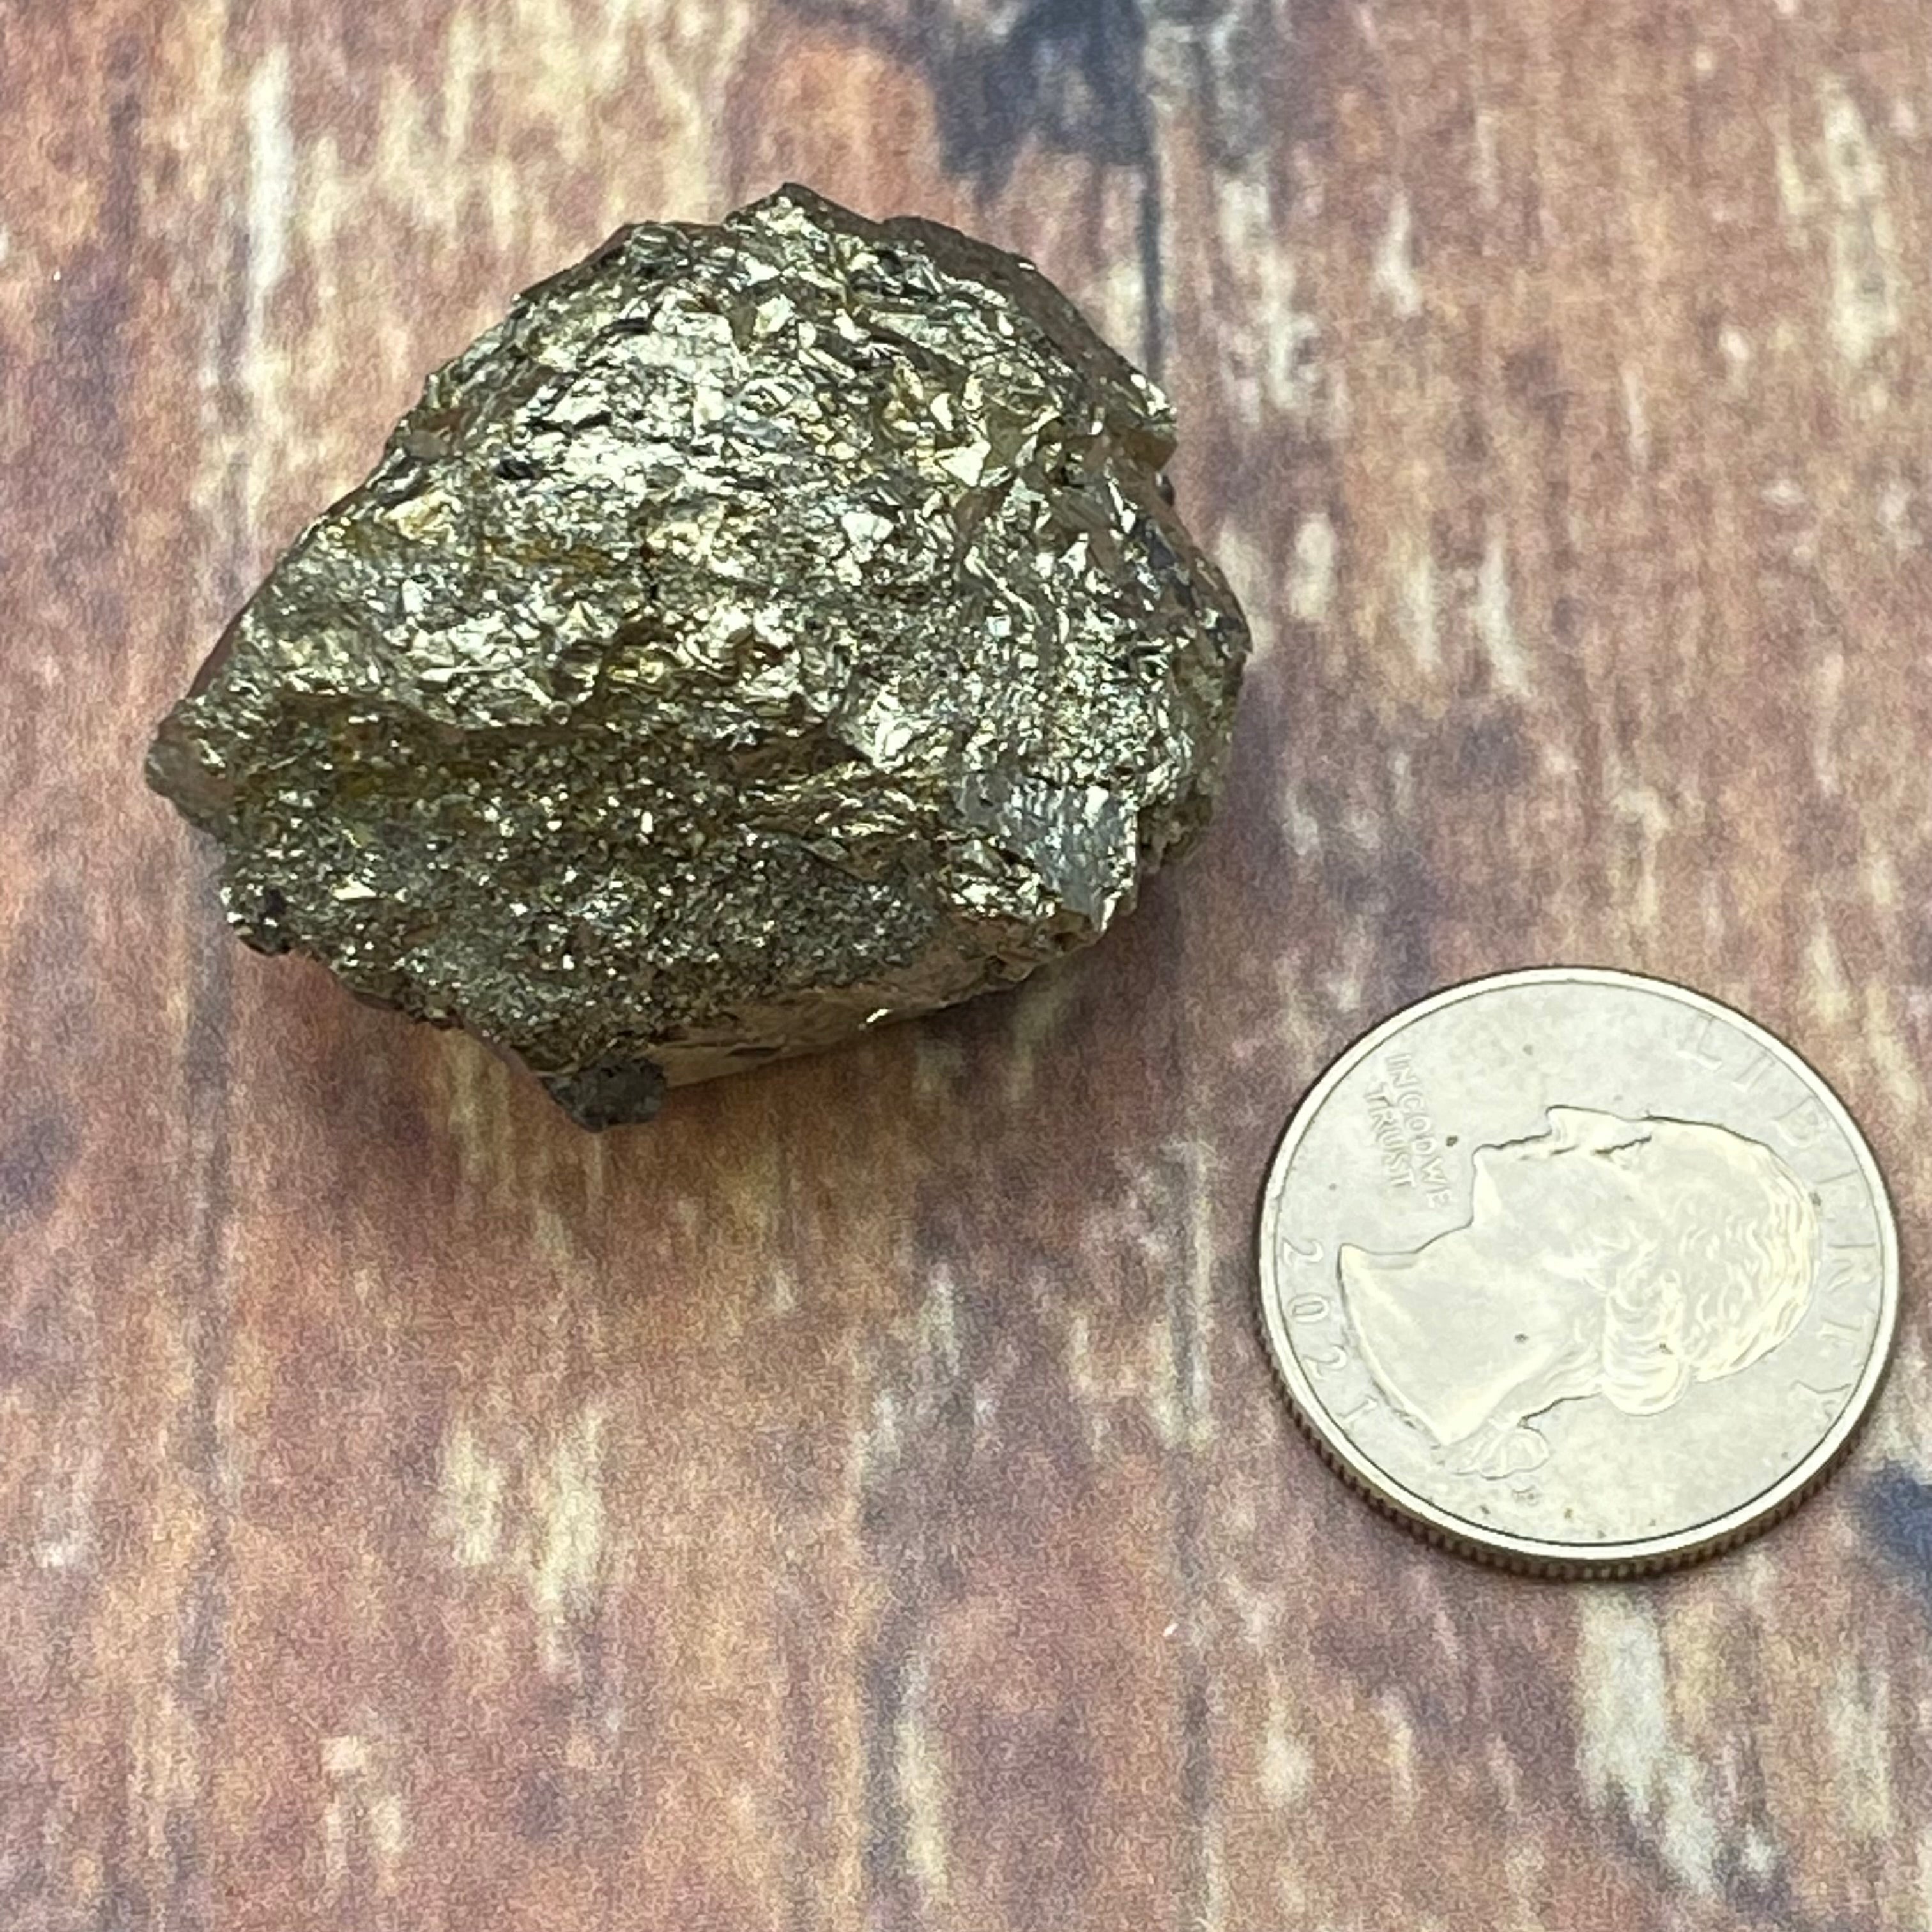 Peruvian Pyrite Crystal - 005